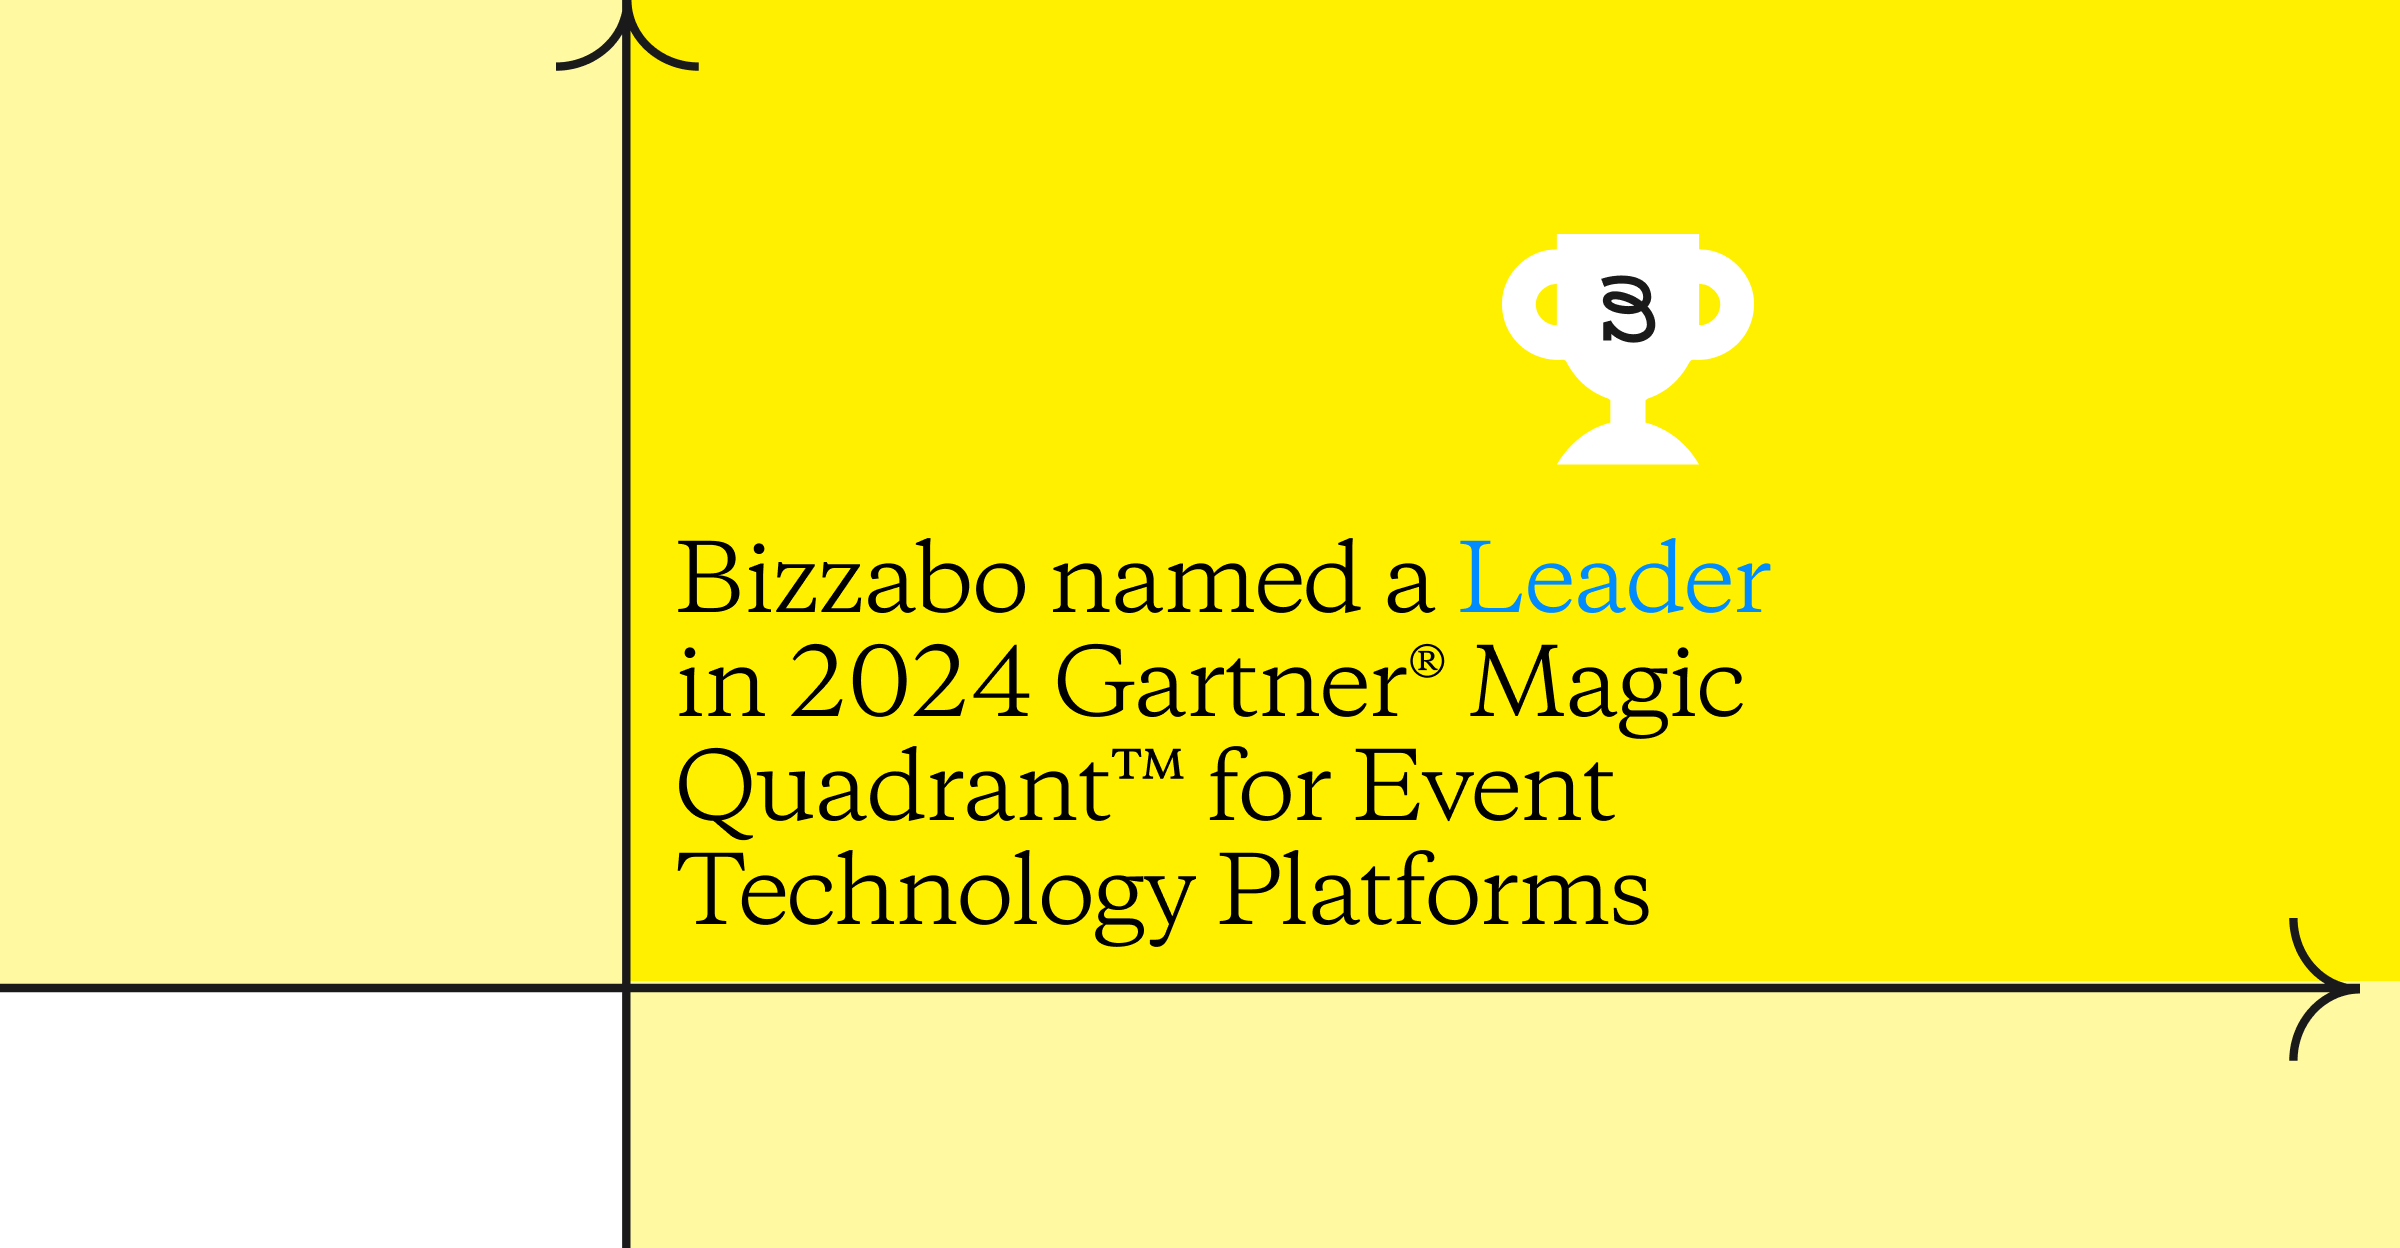 Bizzabo named a Leader in 2024 Gartner® Magic Quadrant™ for Event Technology Platforms